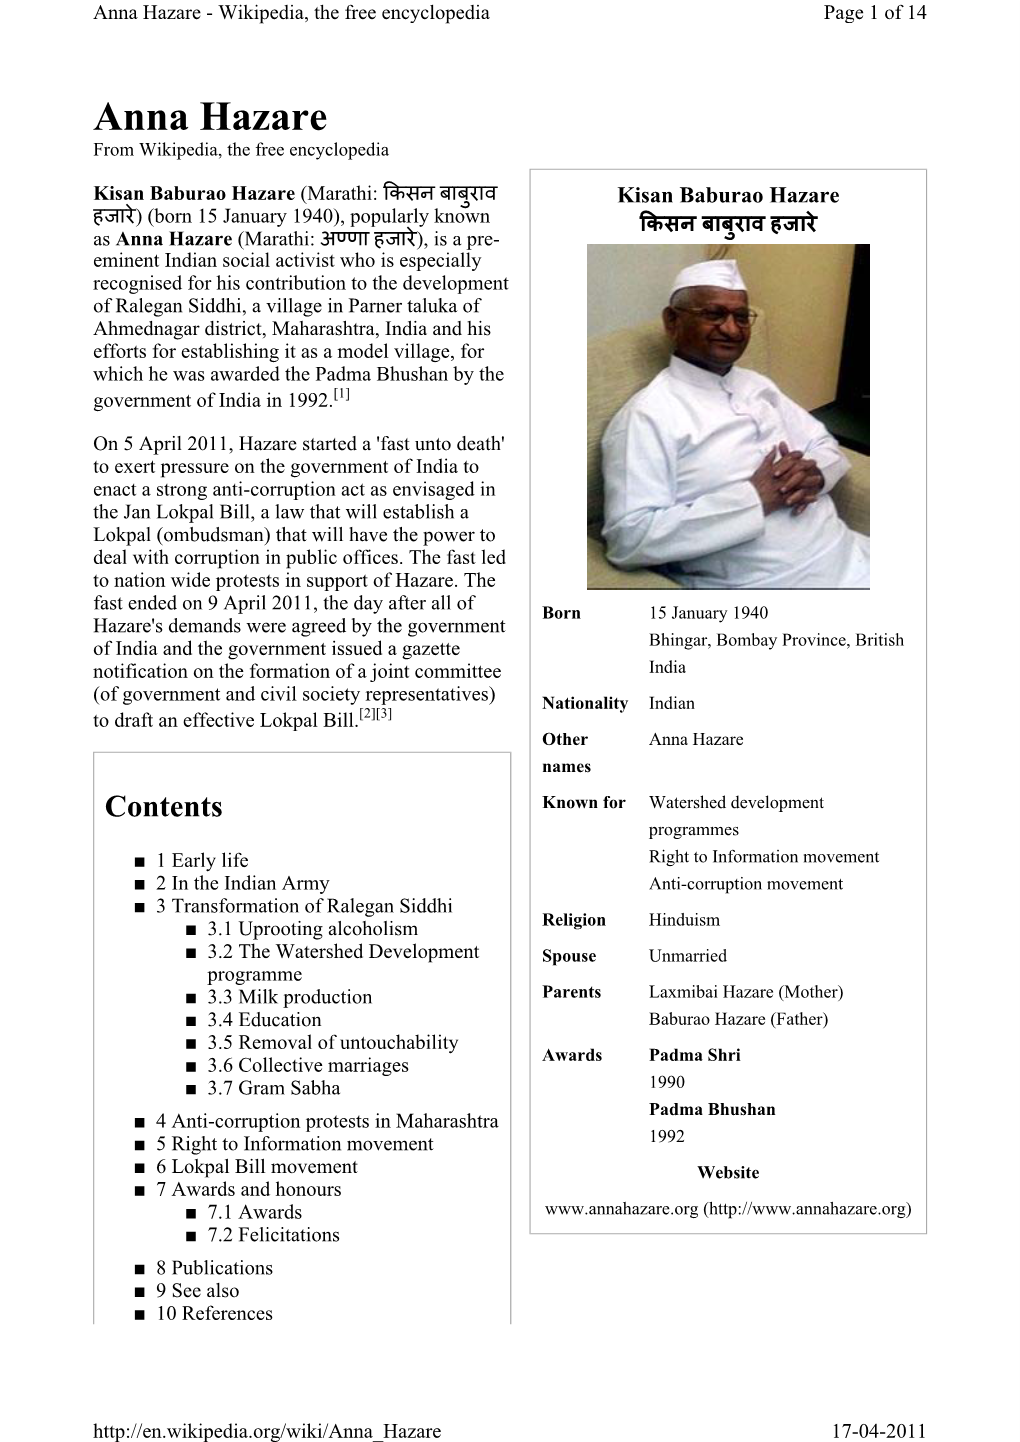 Anna Hazare - Wikipedia, the Free Encyclopedia Page 1 of 14